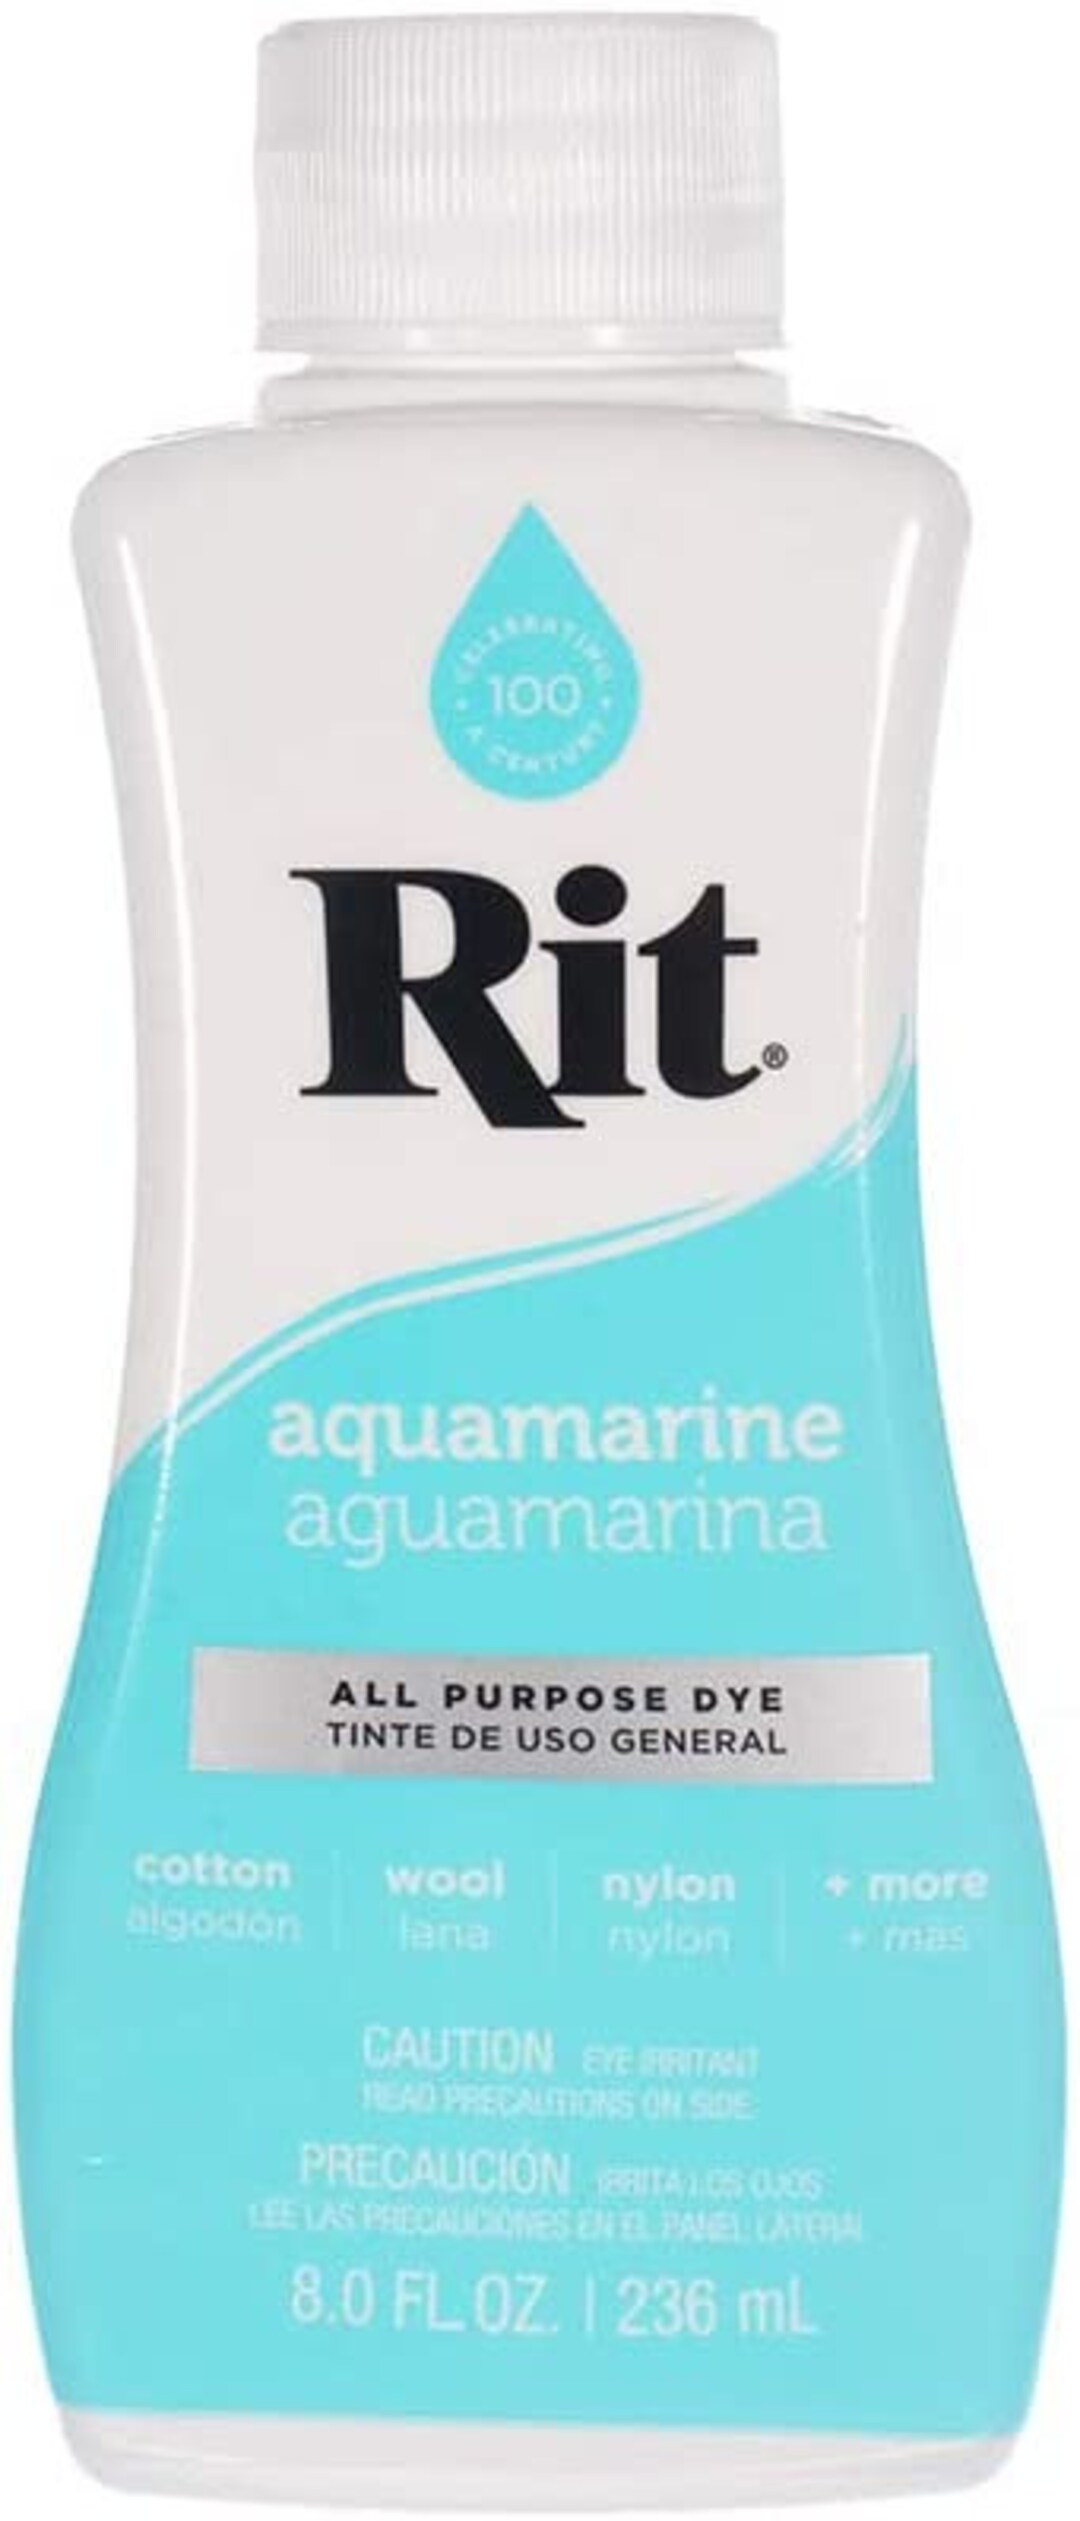 Rit All Purpose Dye, Aquamarine - 8.0 fl oz